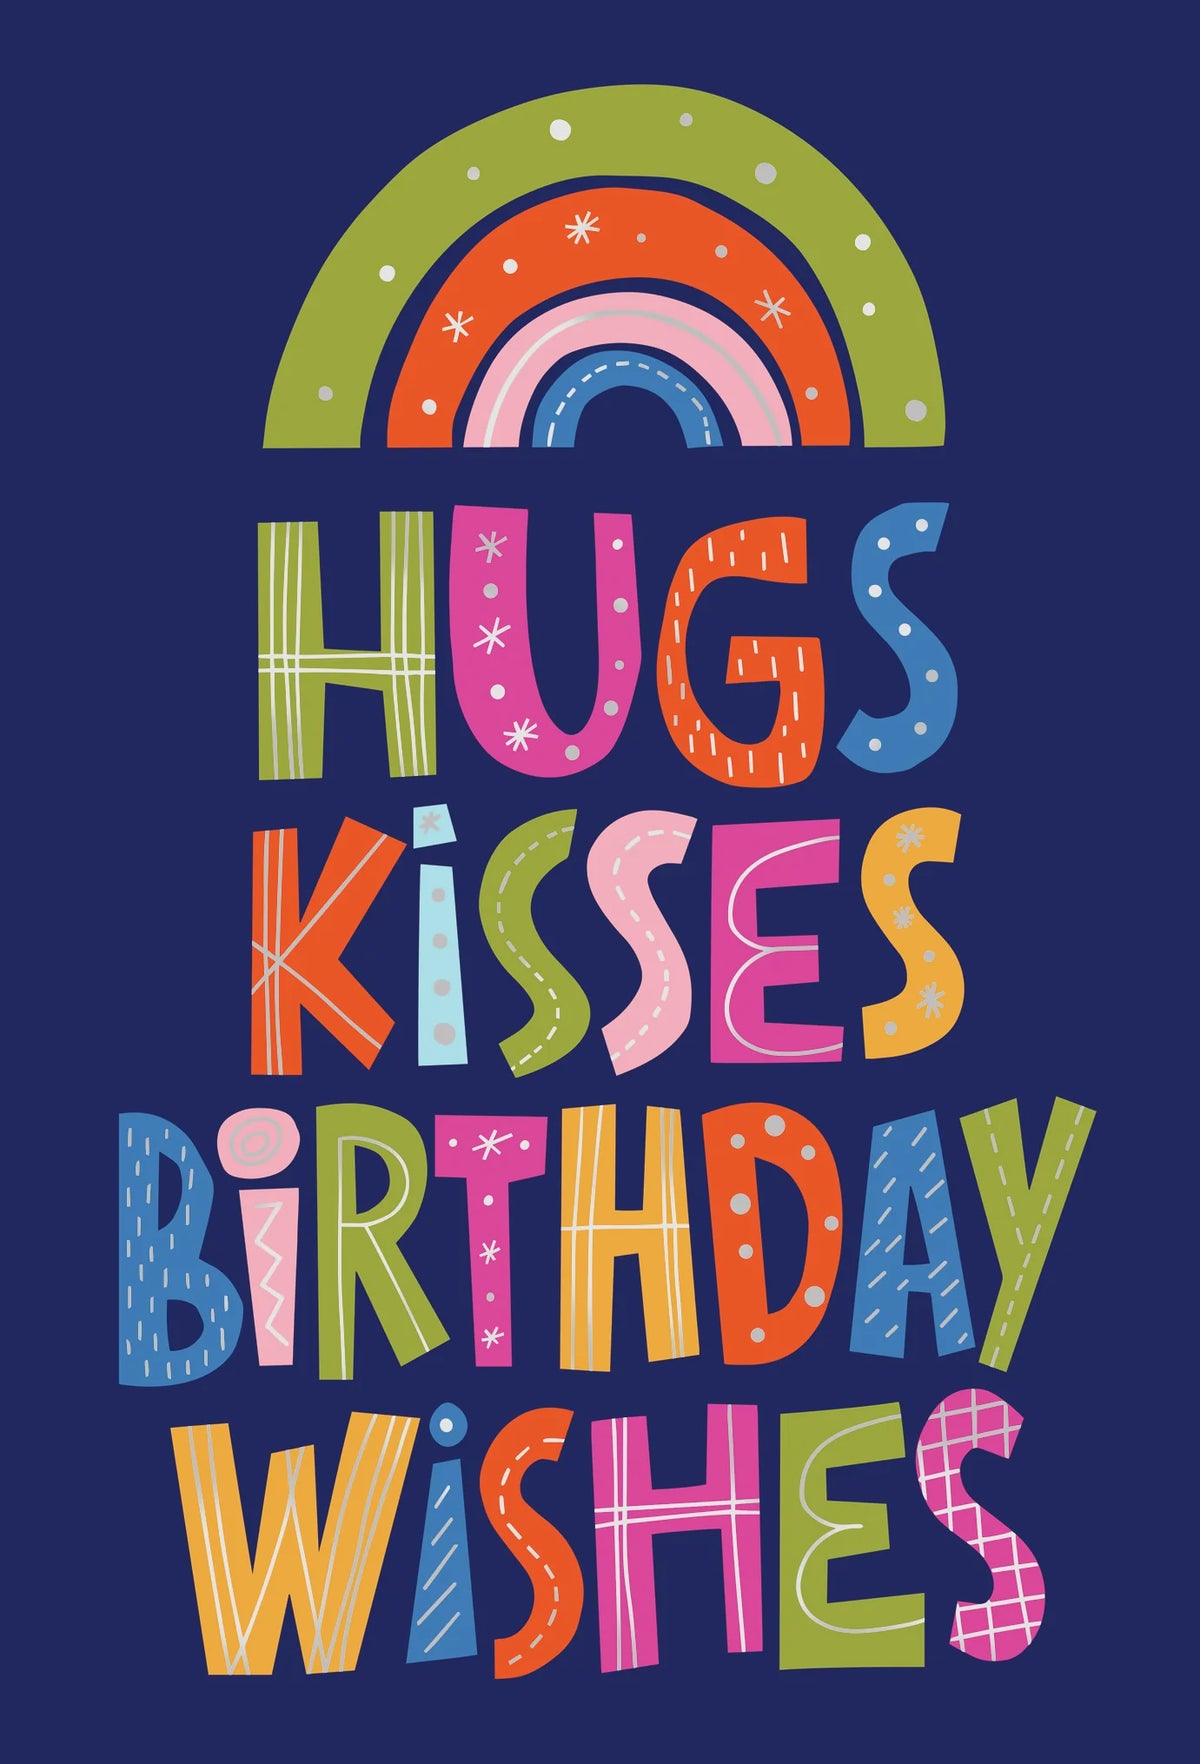 CARD HUGS KISSES BIRTHDAY WISHES